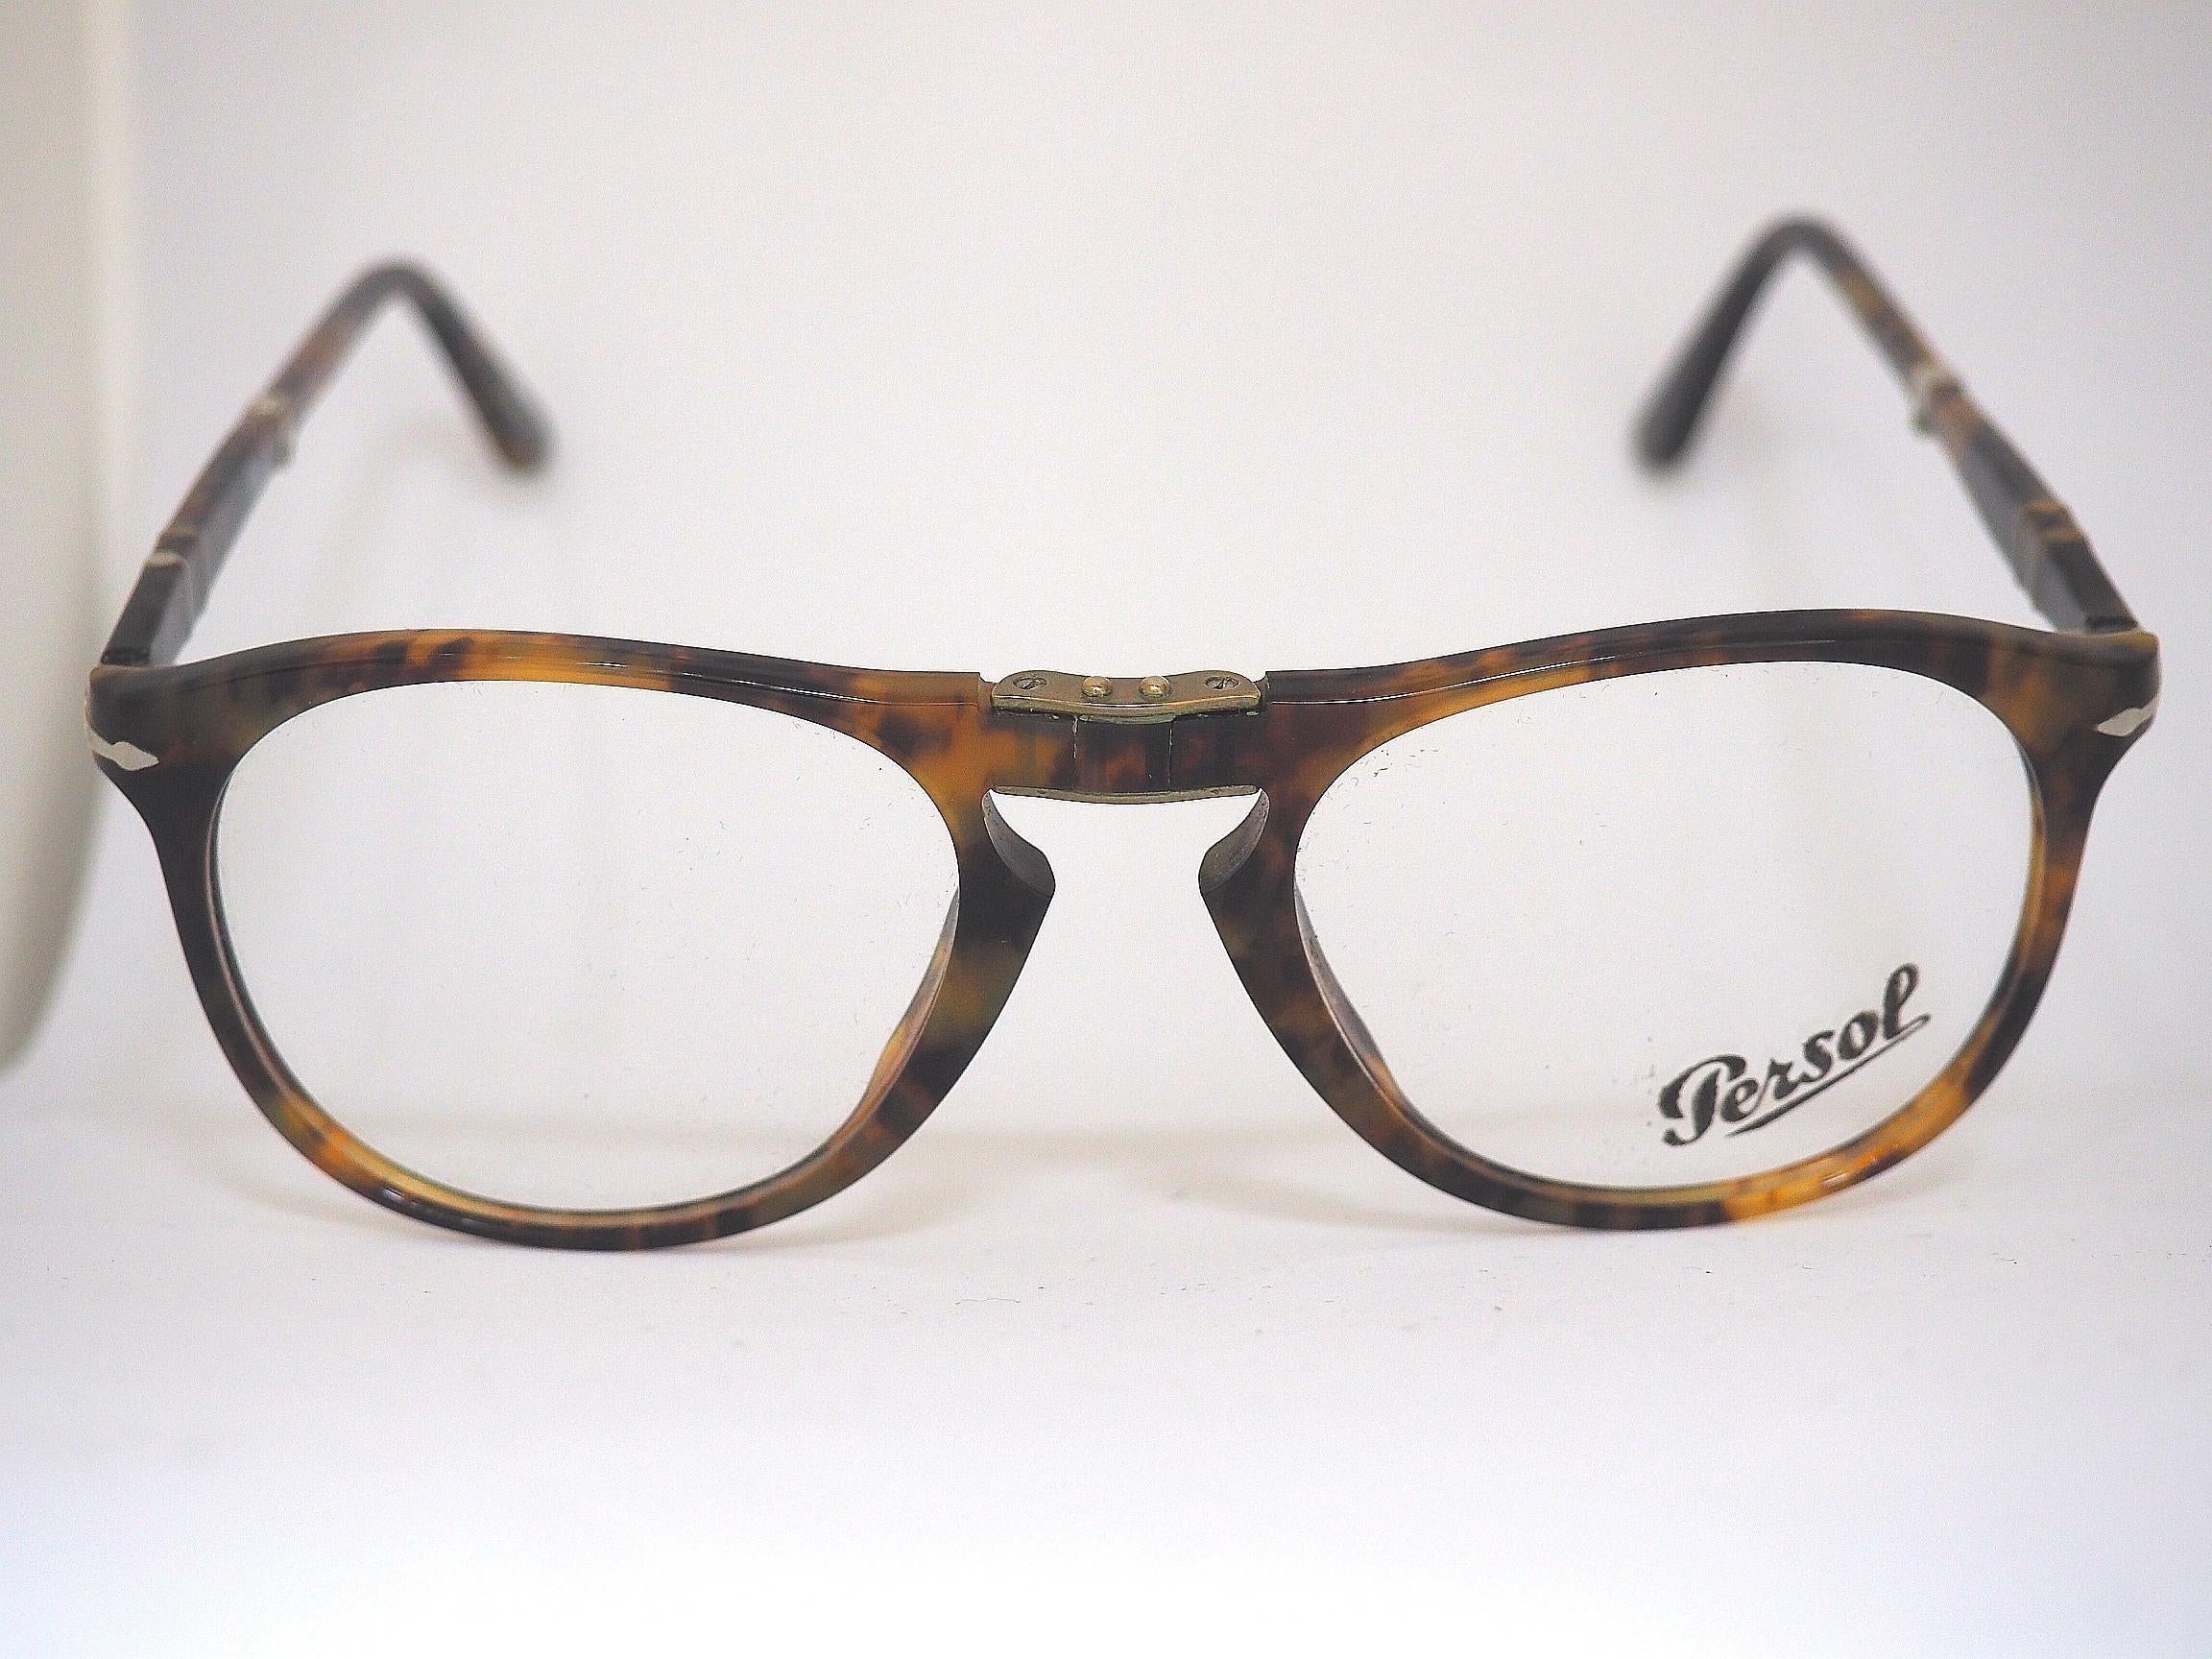 Persol glasses  still with box